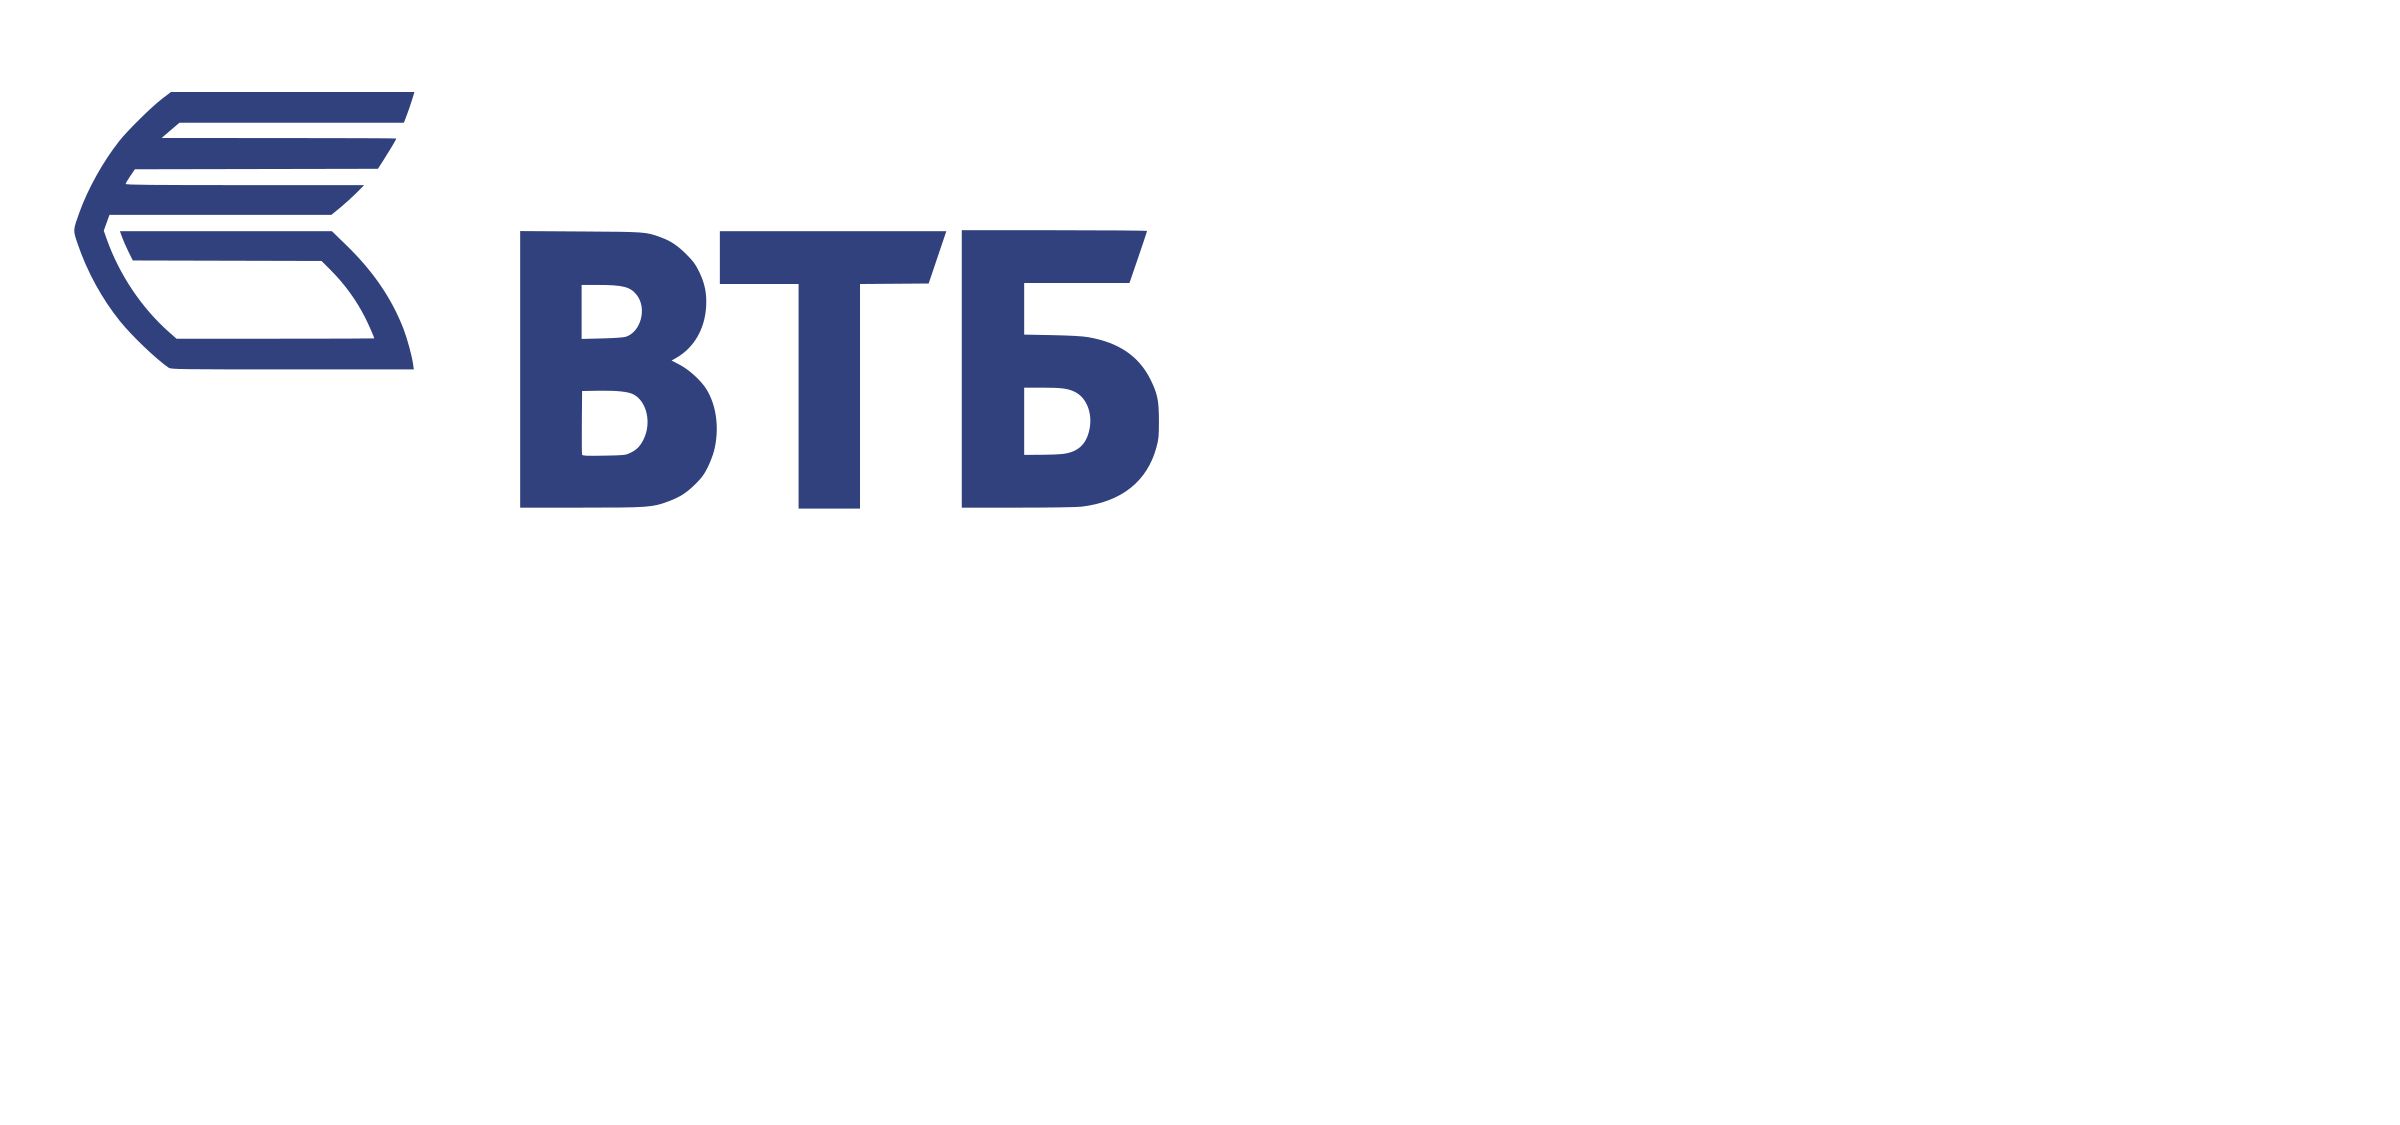 Банк новый логотип. ВТБ банк логотип без фона. ВТБ логотип на прозрачном фоне. ВТБ логотип PNG прозрачный фон. Логотип ВТБ банка новый прозрачный.